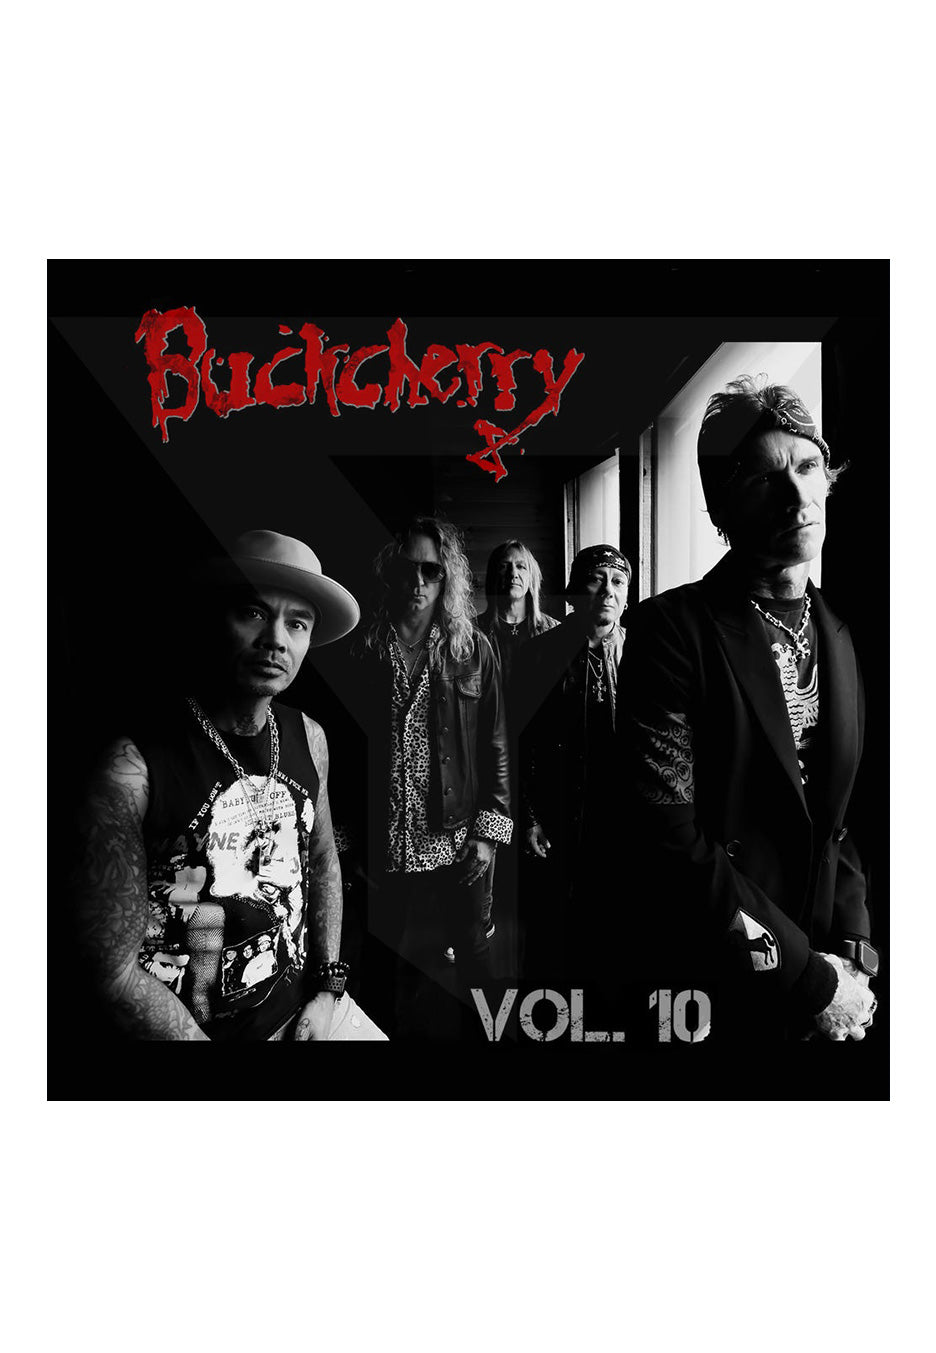 Buckcherry - Vol. 10 - Vinyl